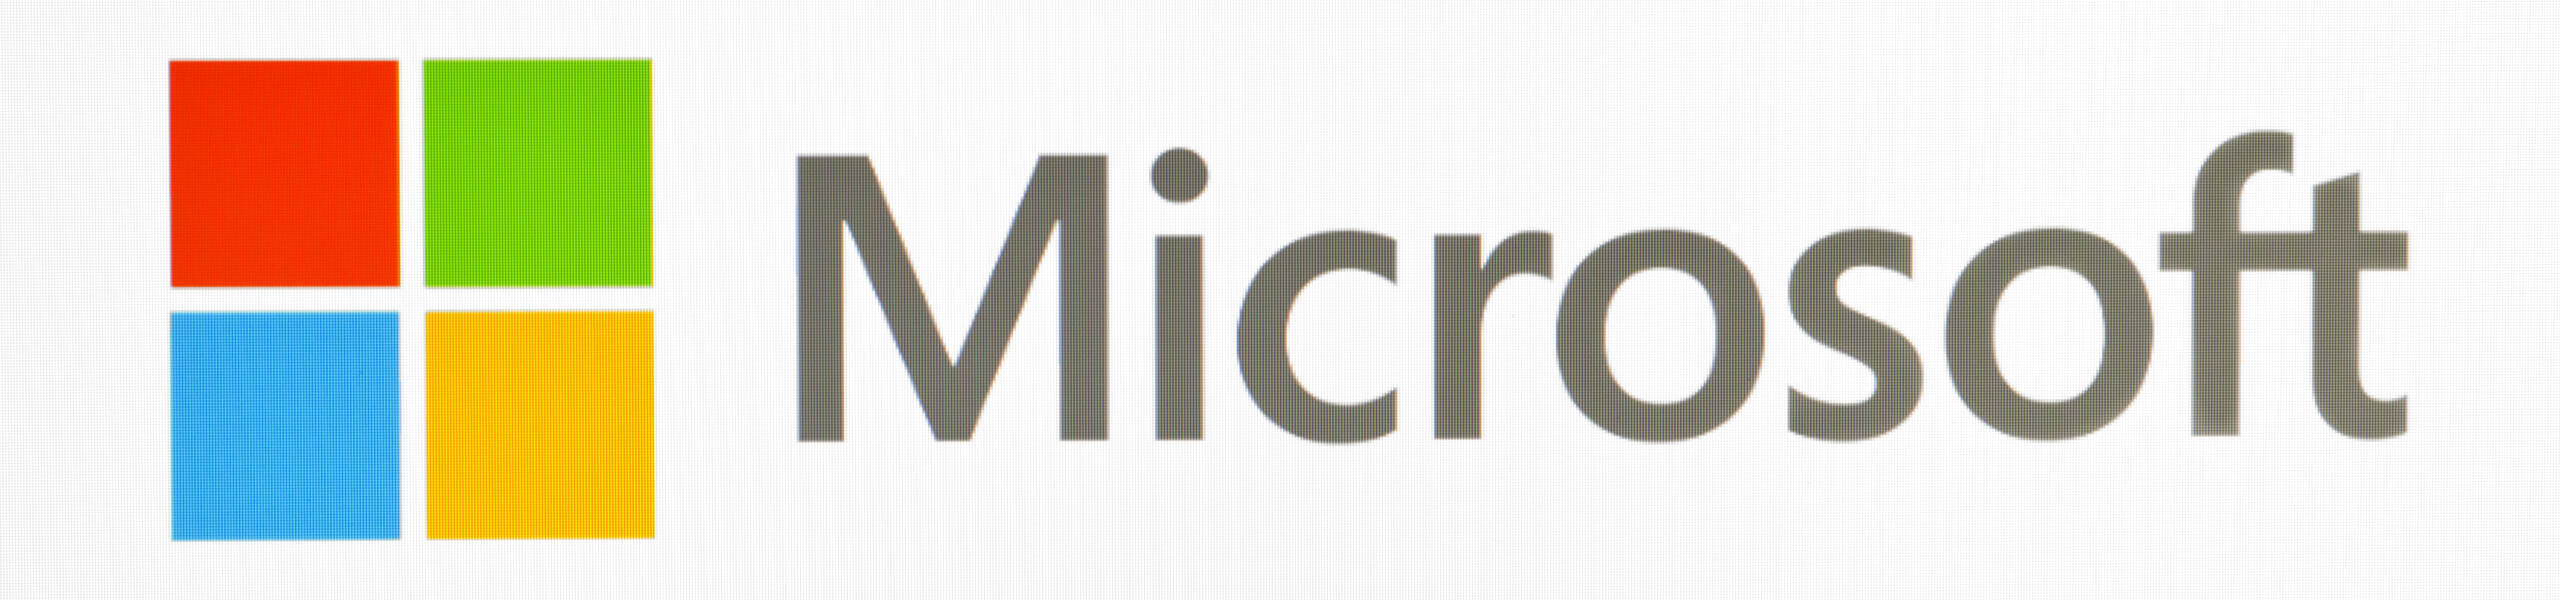 Microsoft: earnings report on July 27